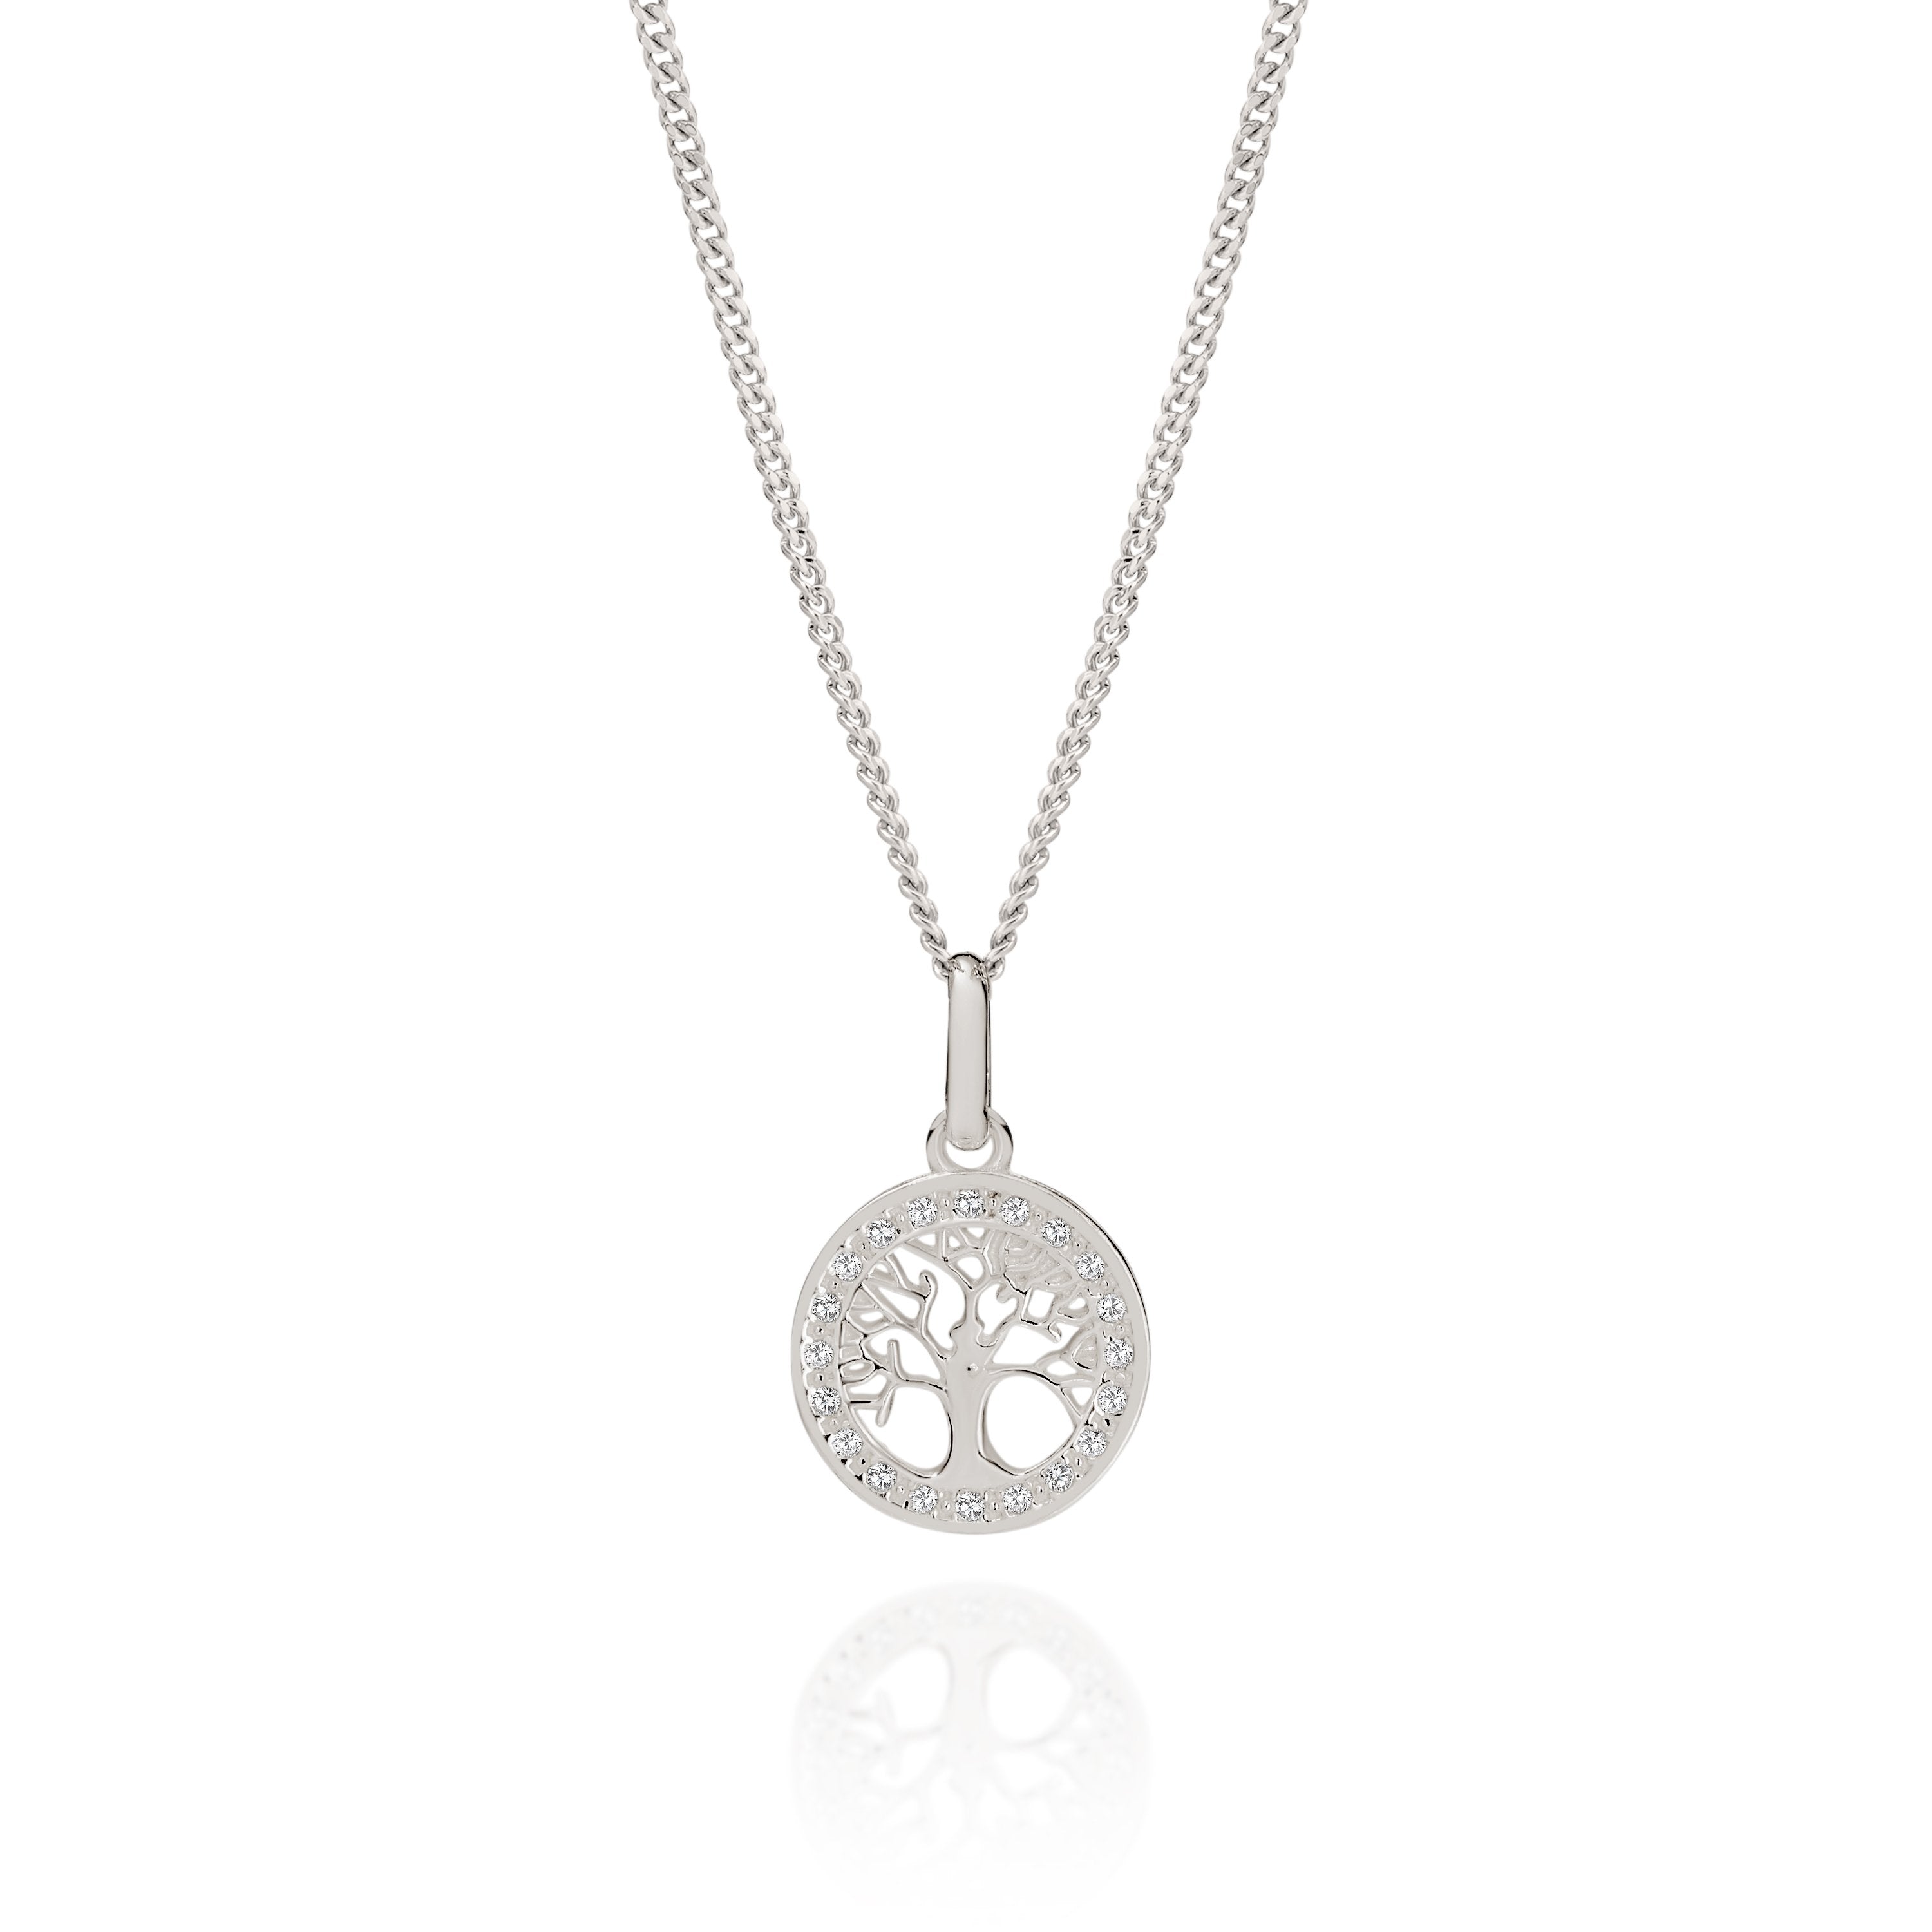 Silver stone set tree of life pendant